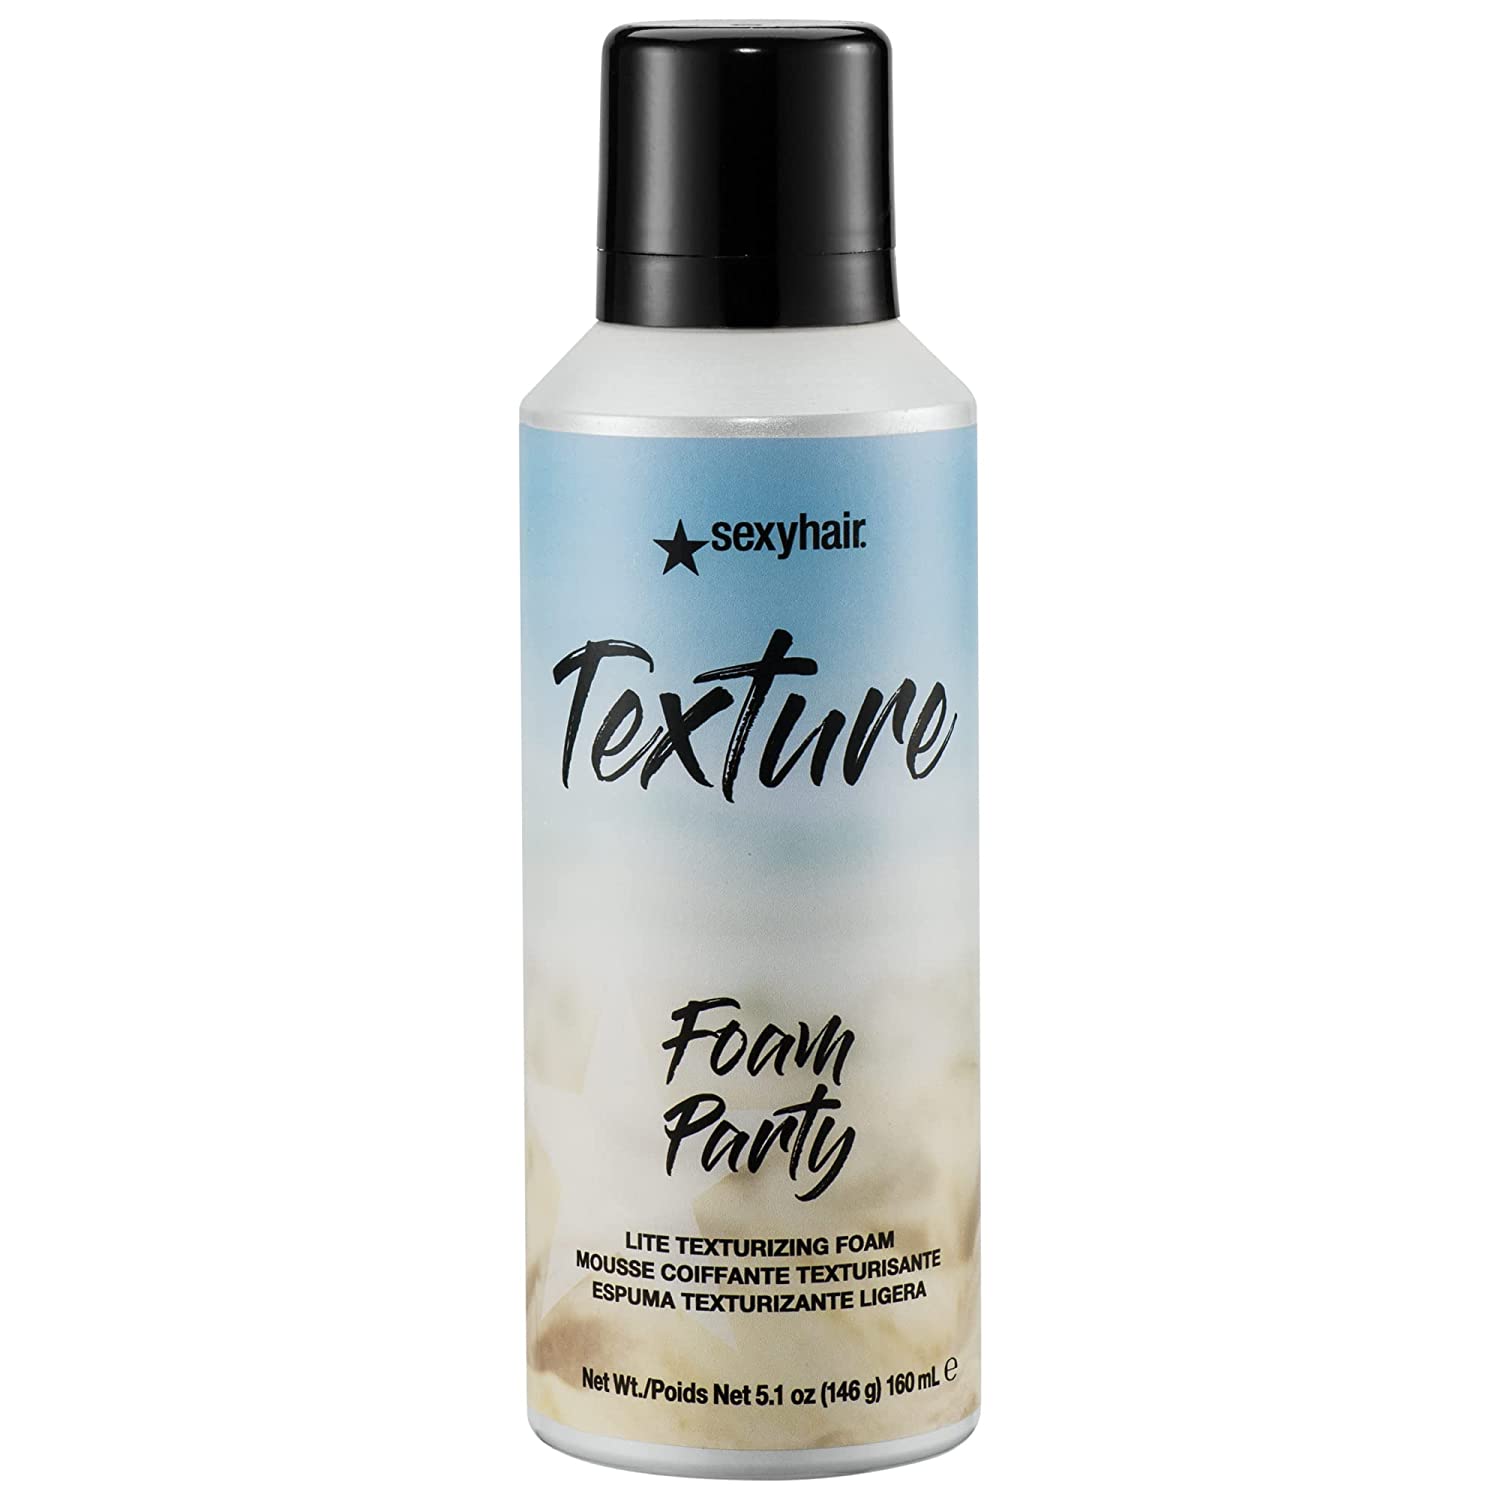 SexyHair Texture Foam Party Lite Texturizing Foam - 5.1 oz (Buy 3 Get 1 Free Mix & Match)